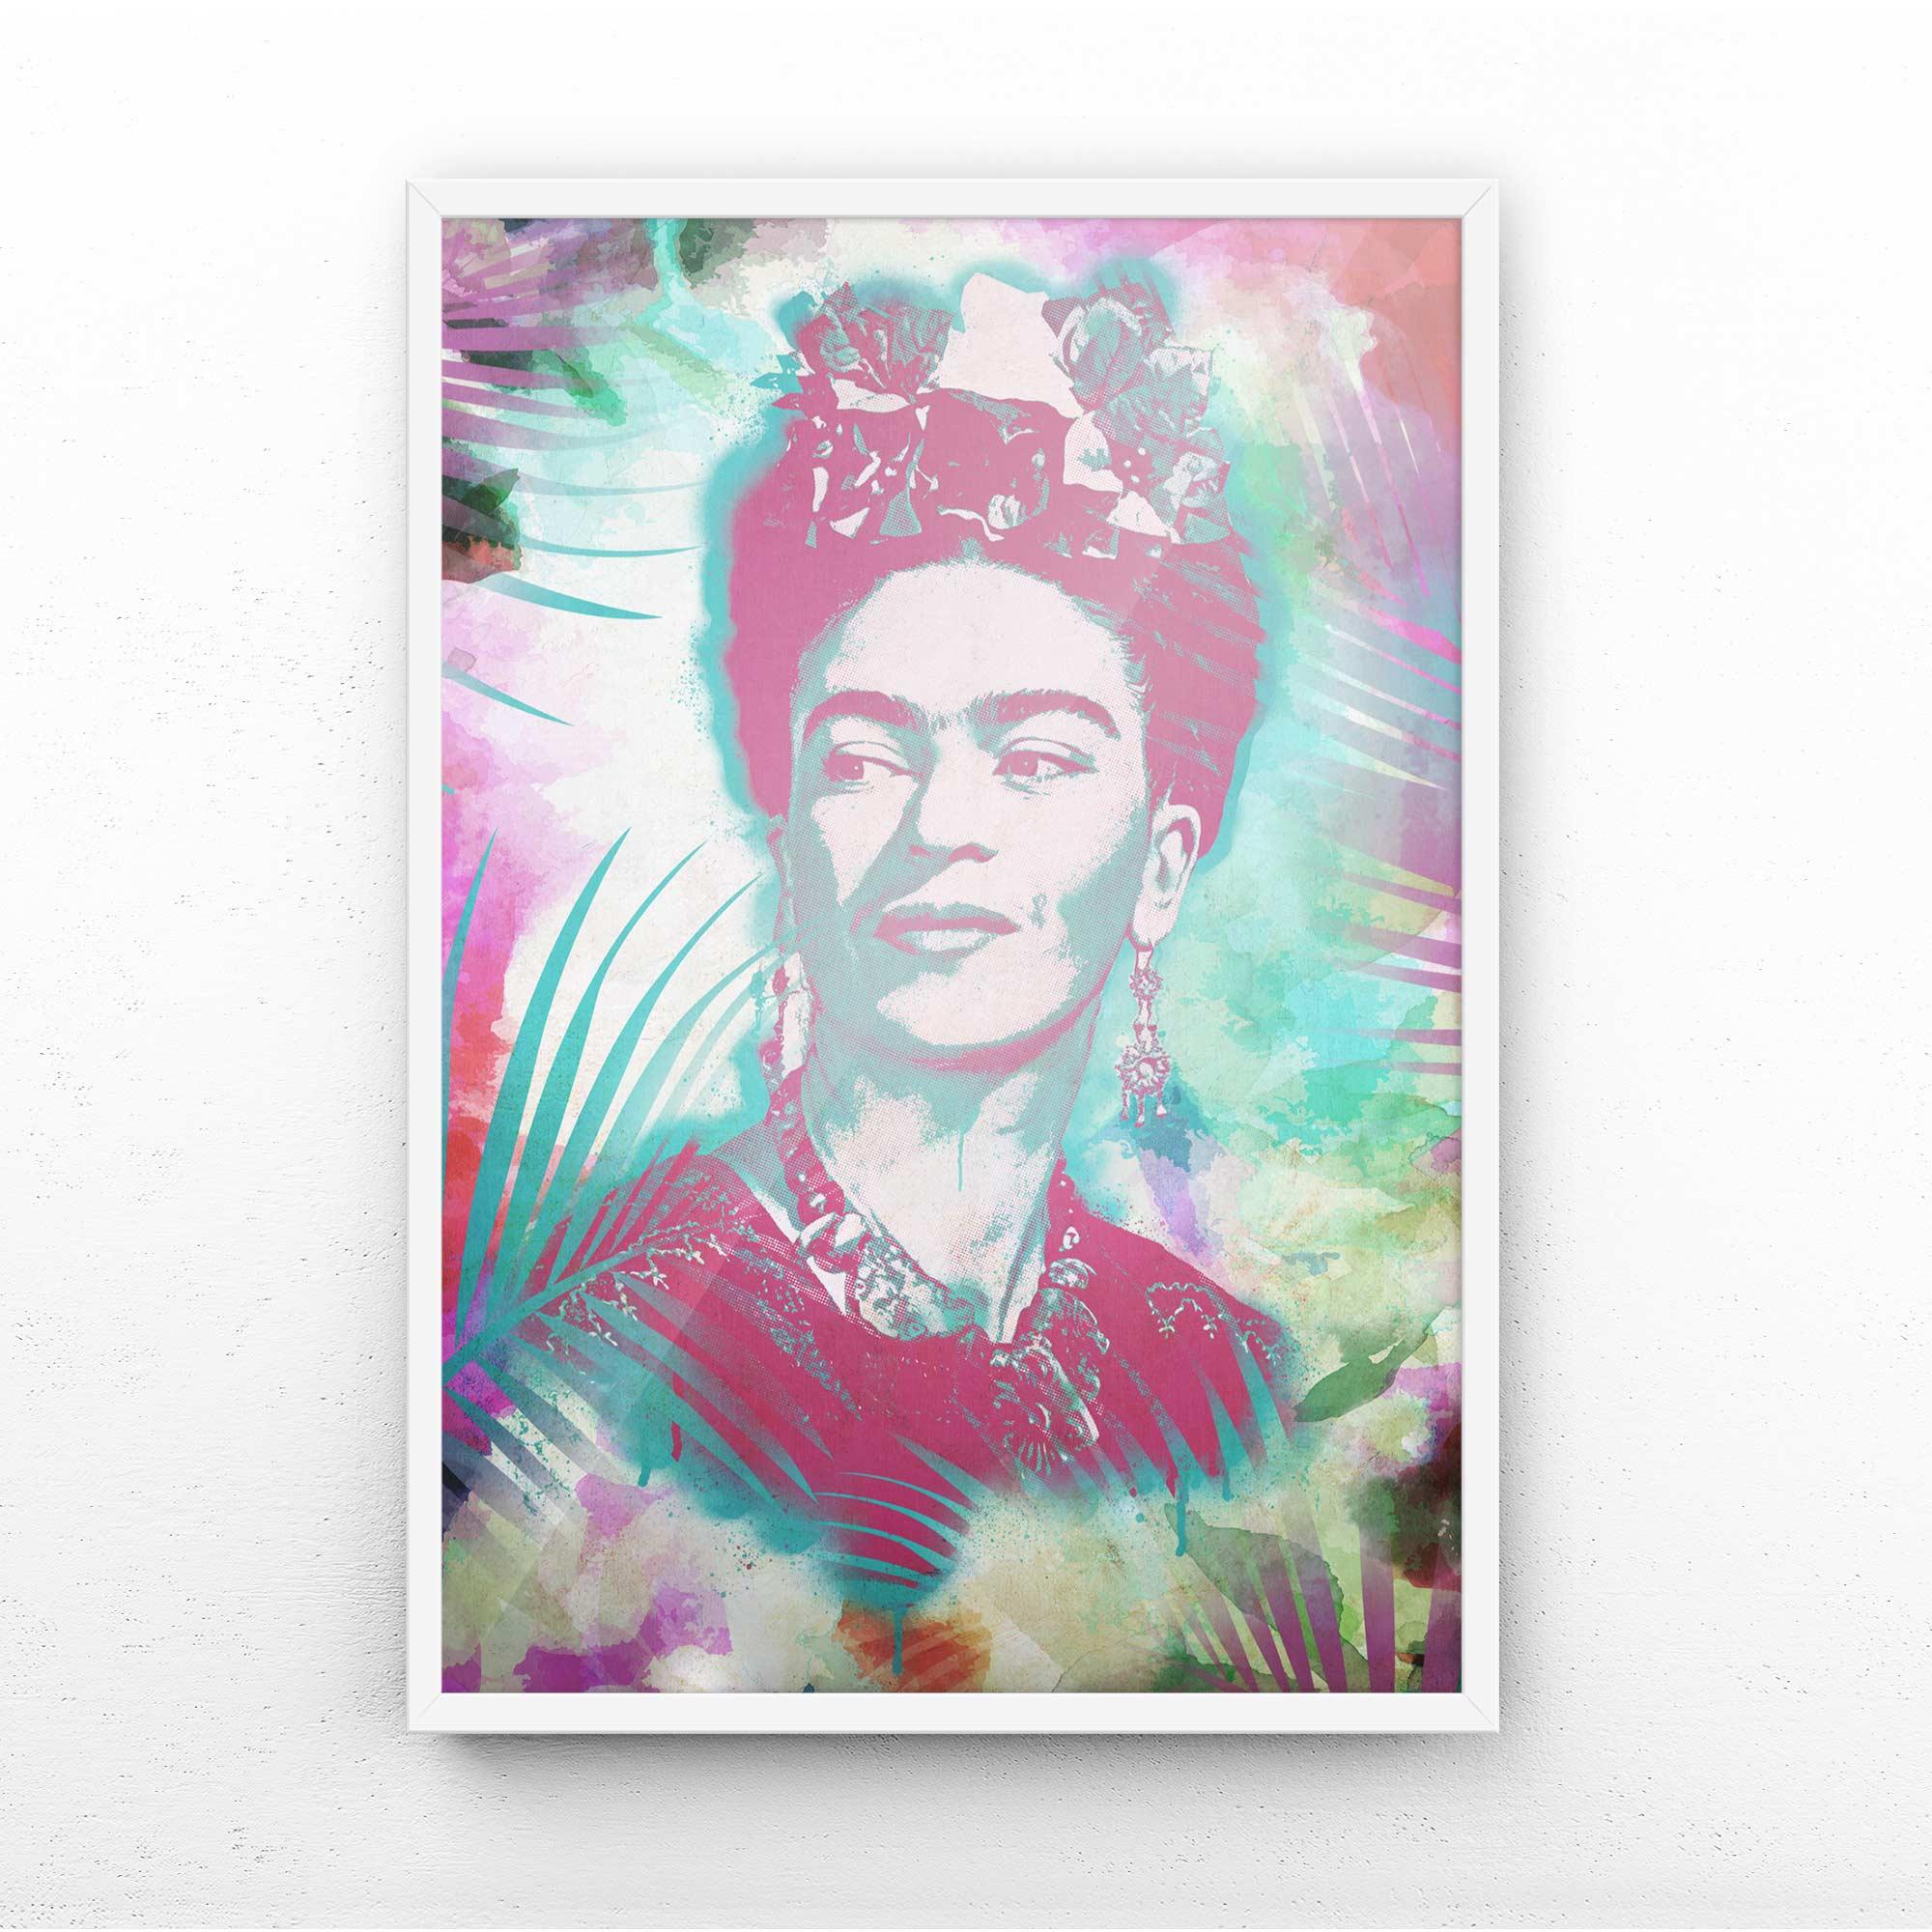 Frida Kahlo wall art